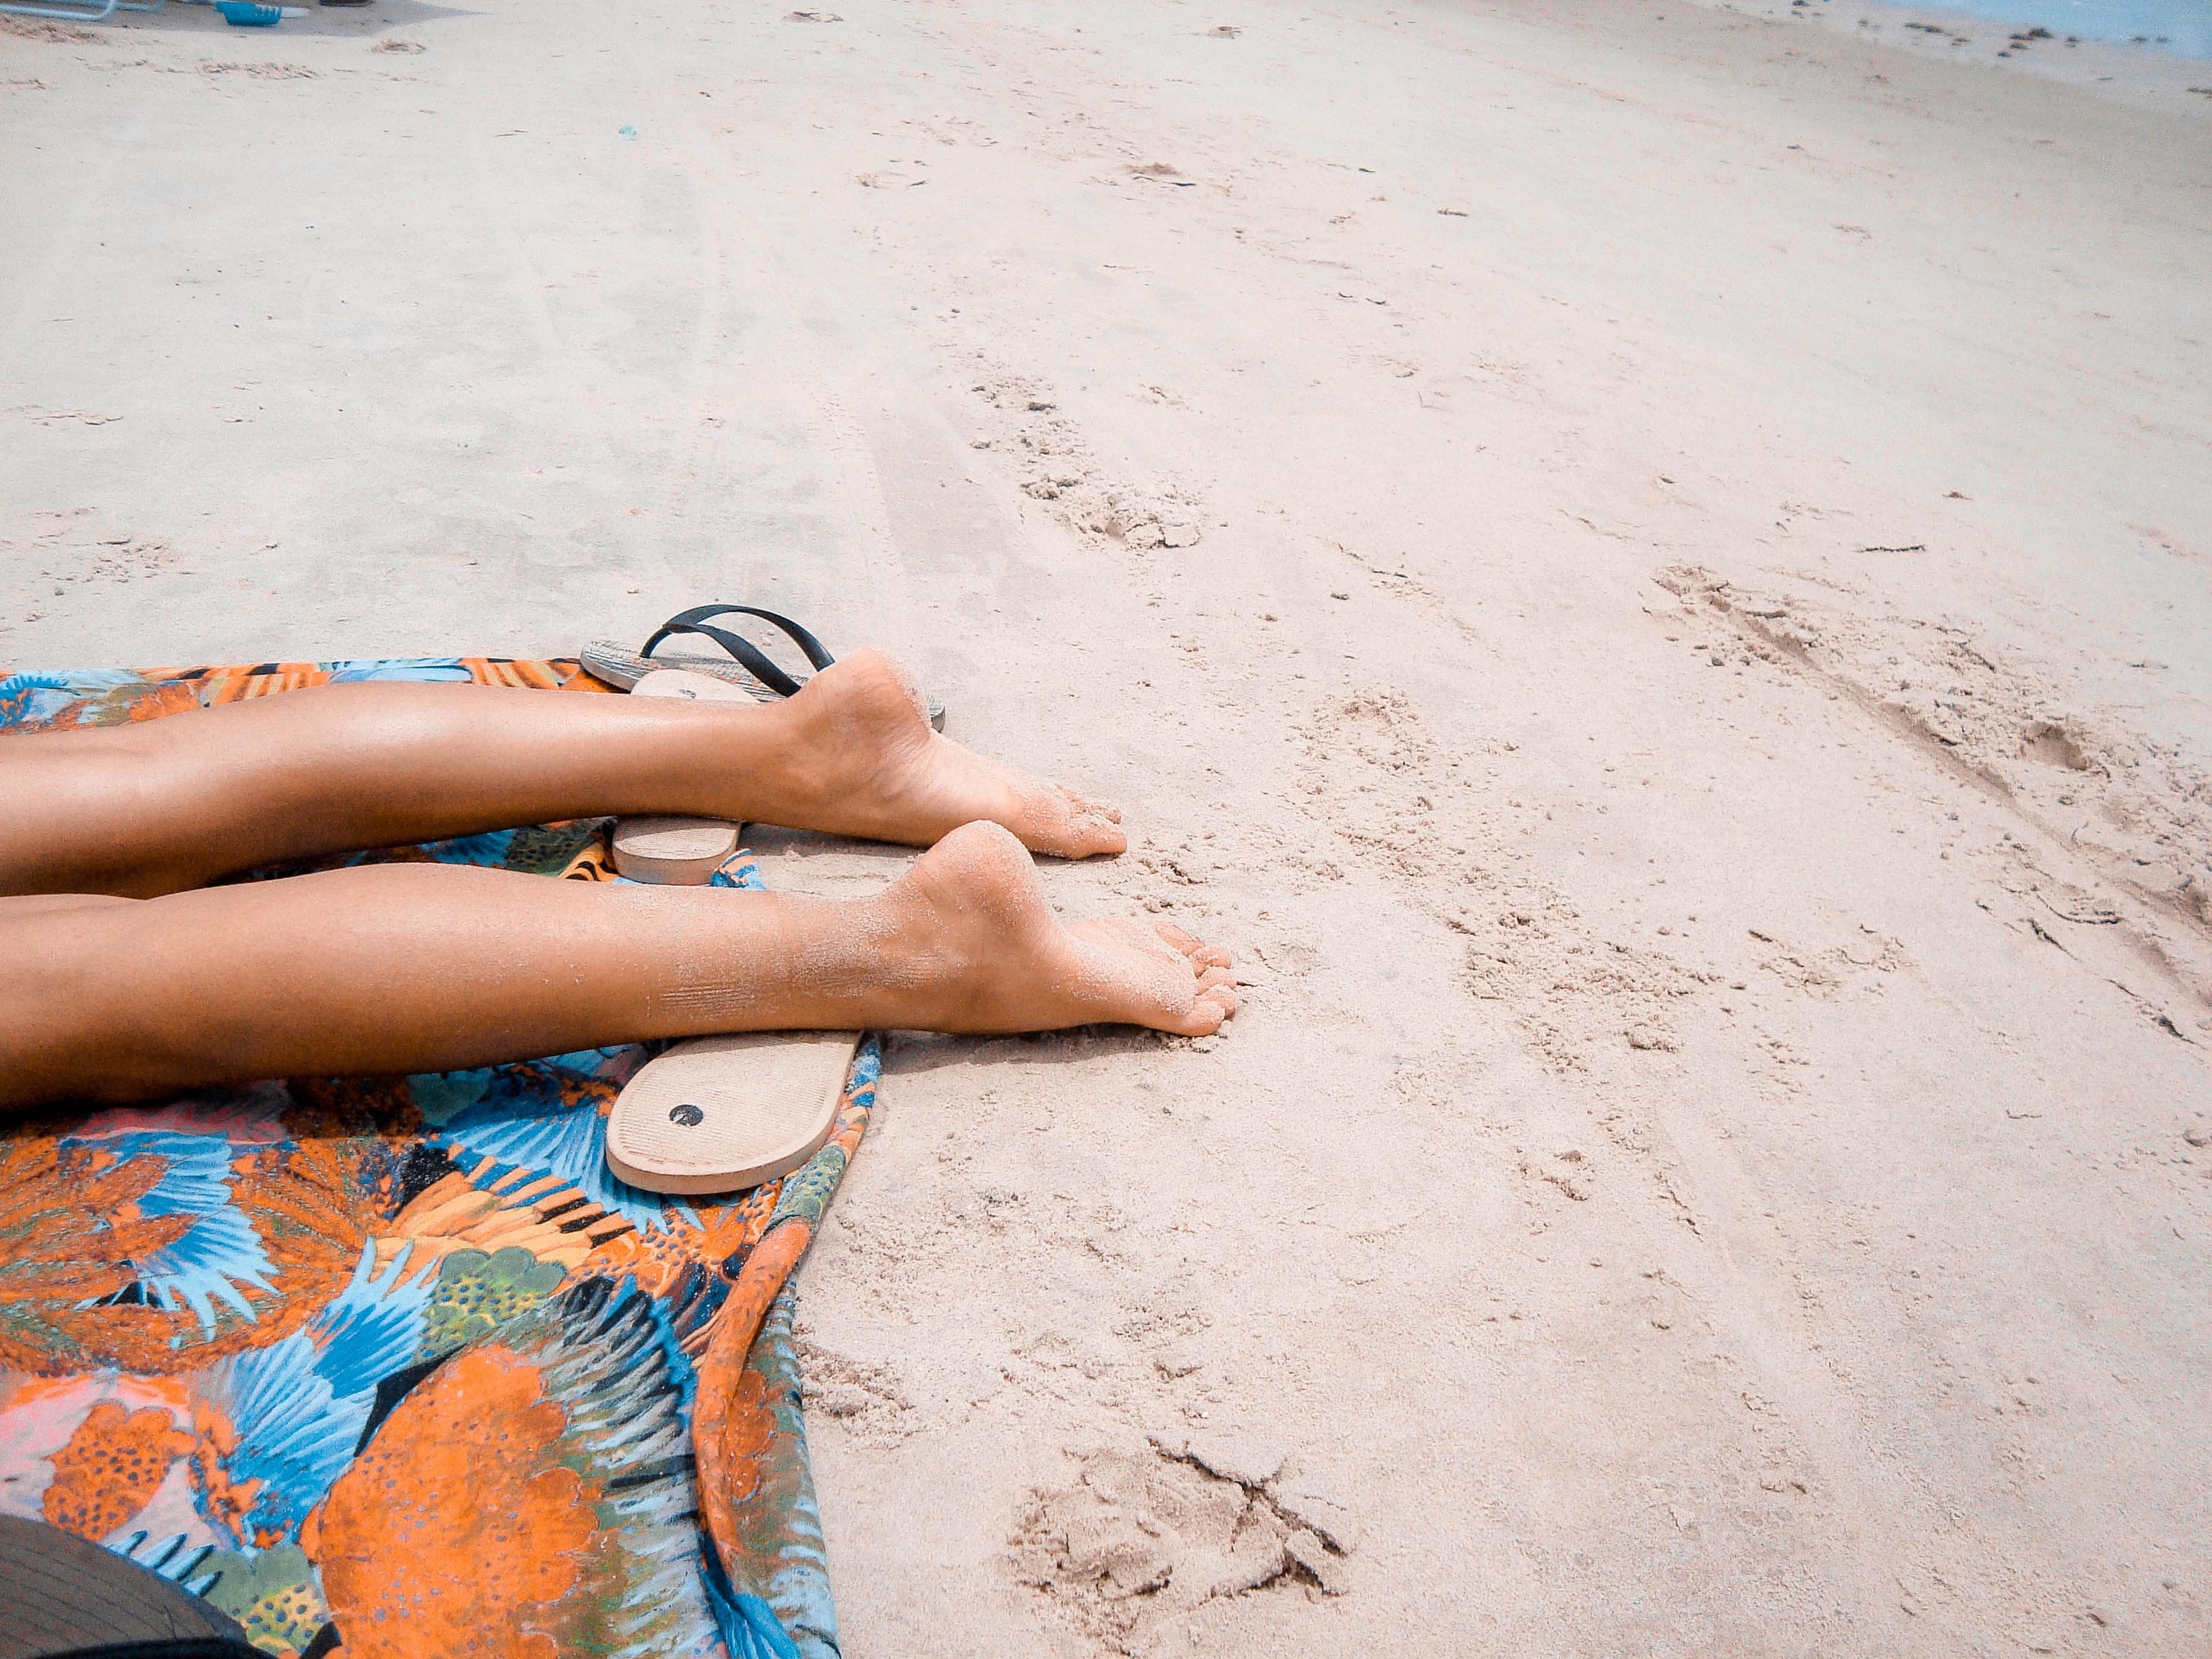 Stock image - Pitimbu Brazil - person sunbathing on beach holiday - Photo by Matheus Vinicius